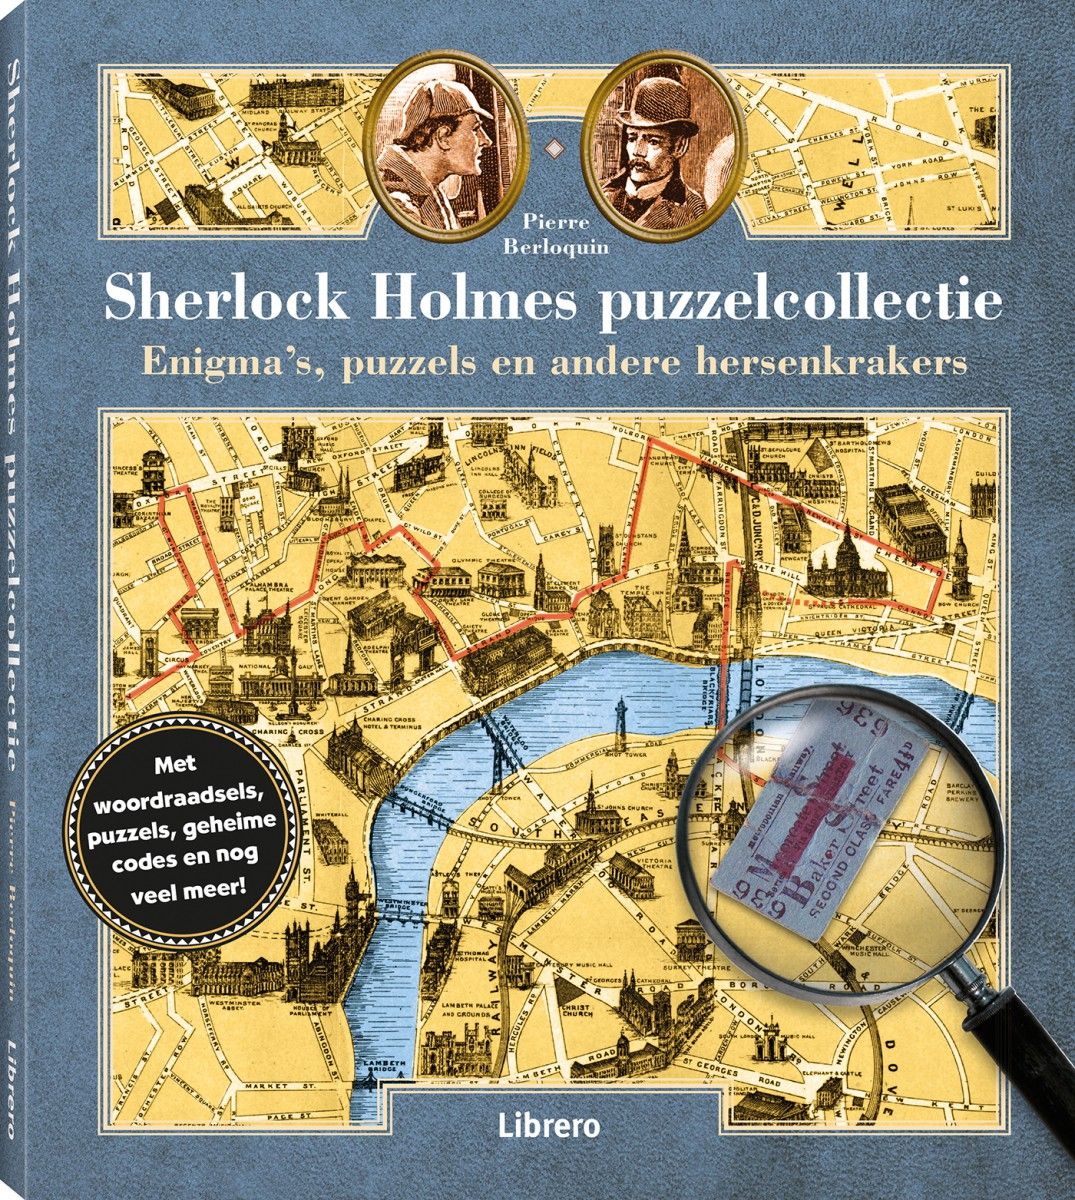 Couscous gunstig namens Sherlock Holmes puzzelcollectie - Librero b.v.